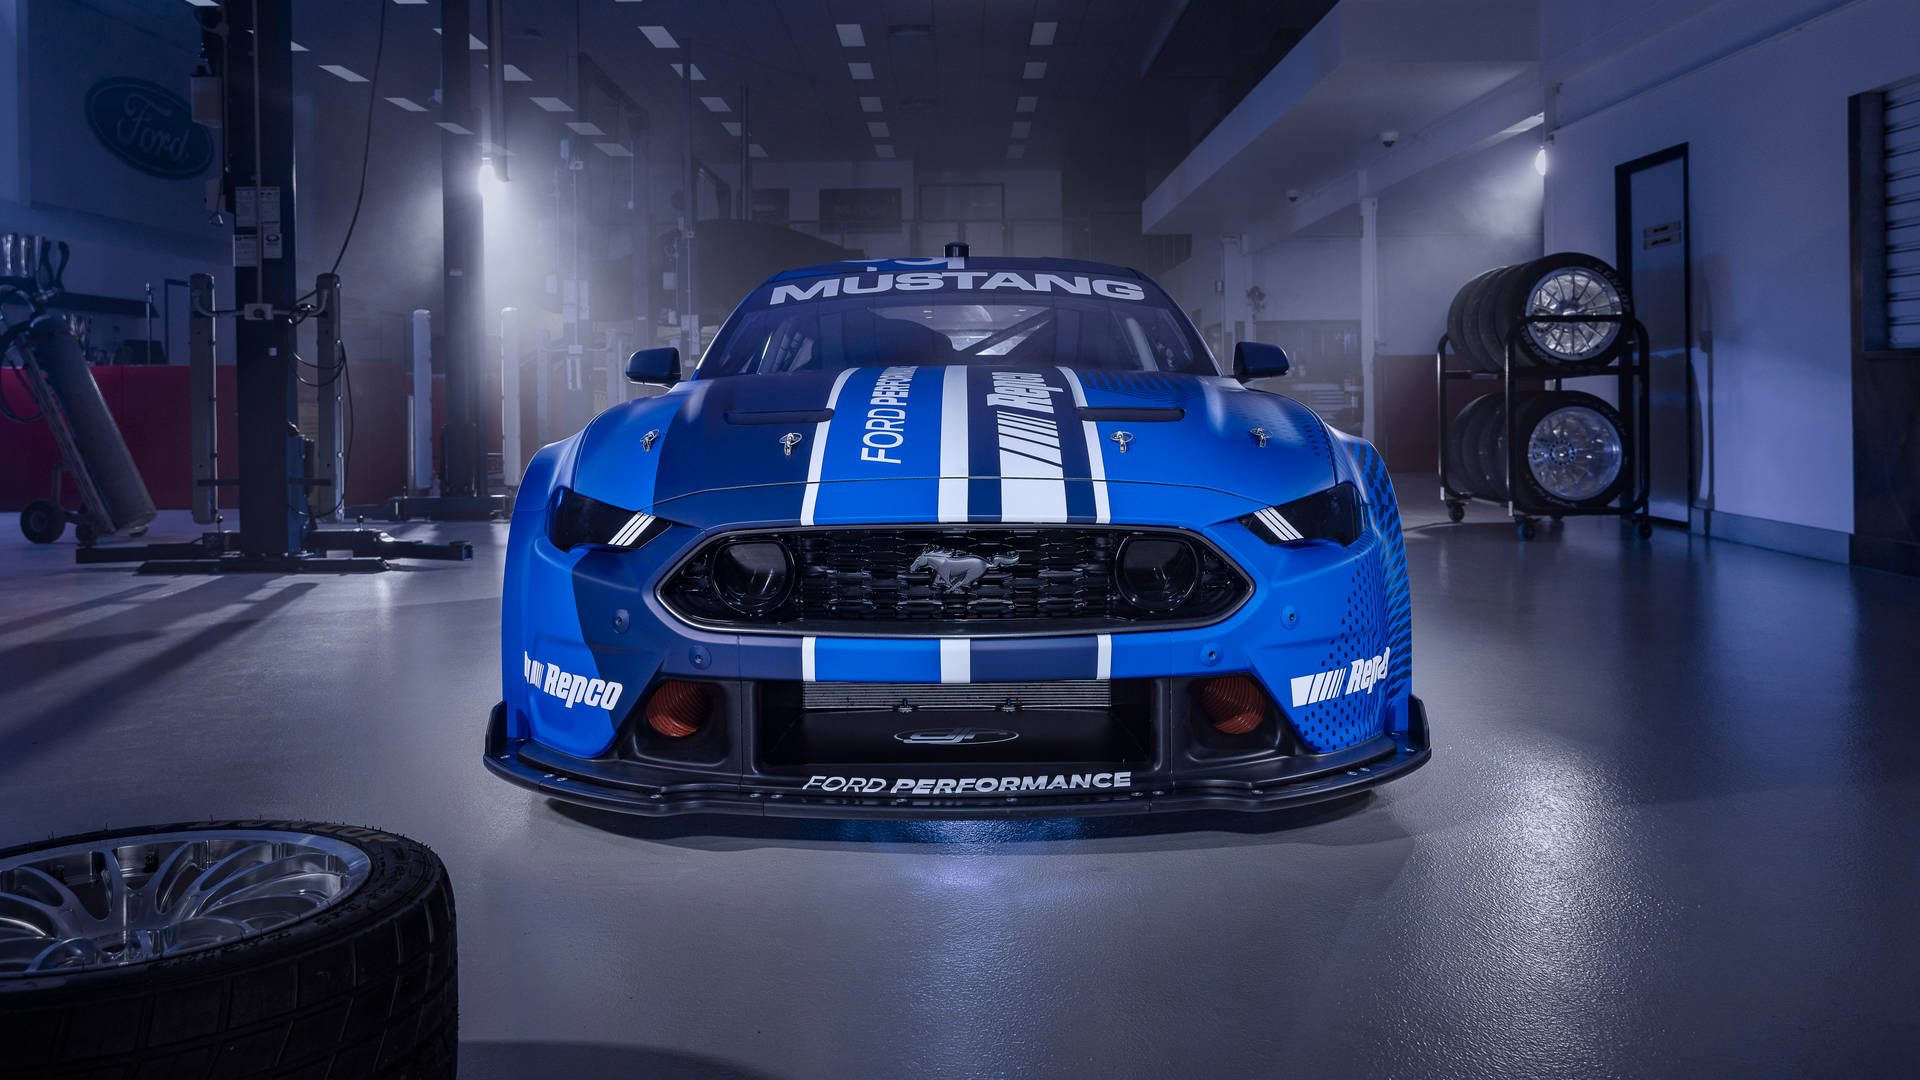 Cool Mustang In Garage Wallpaper